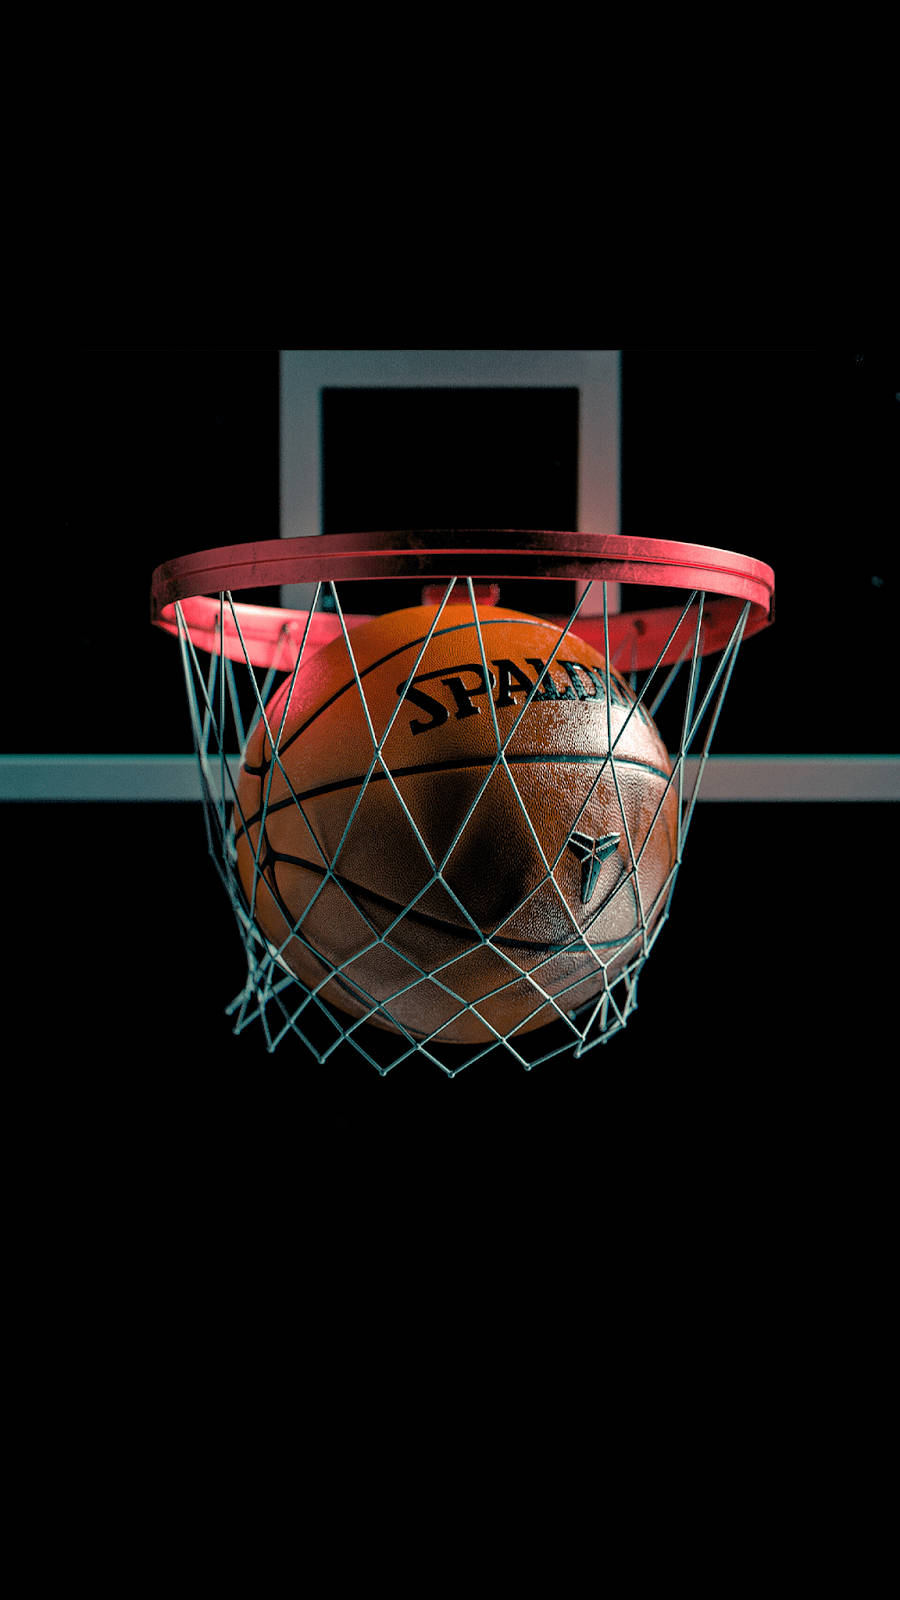 Hd Basketball Ball In Ring